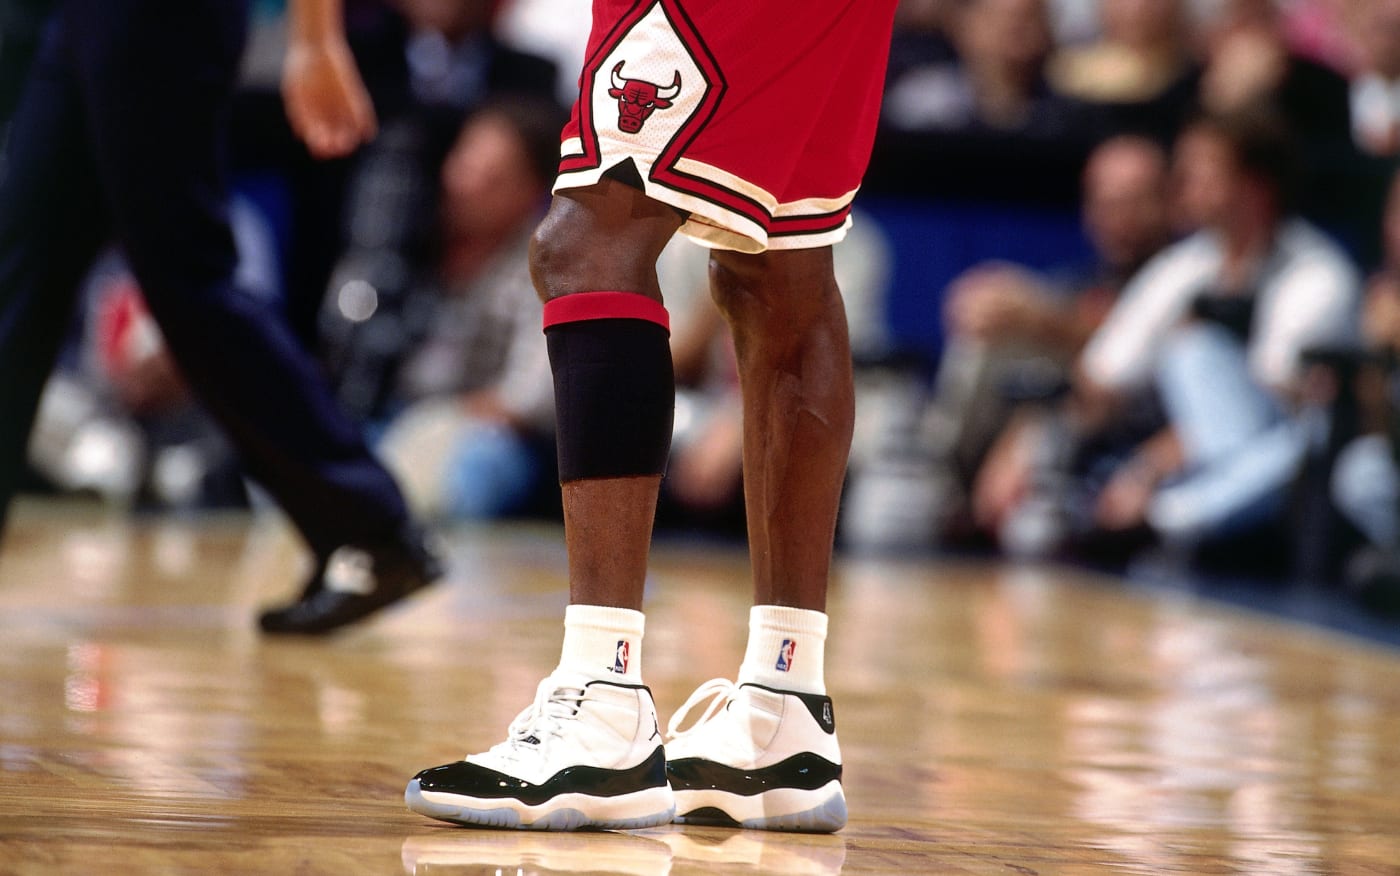 Guggenheim Museum activation Charming How the Air Jordan XI Became Michael Jordan's Most Hyped Sneaker | Complex